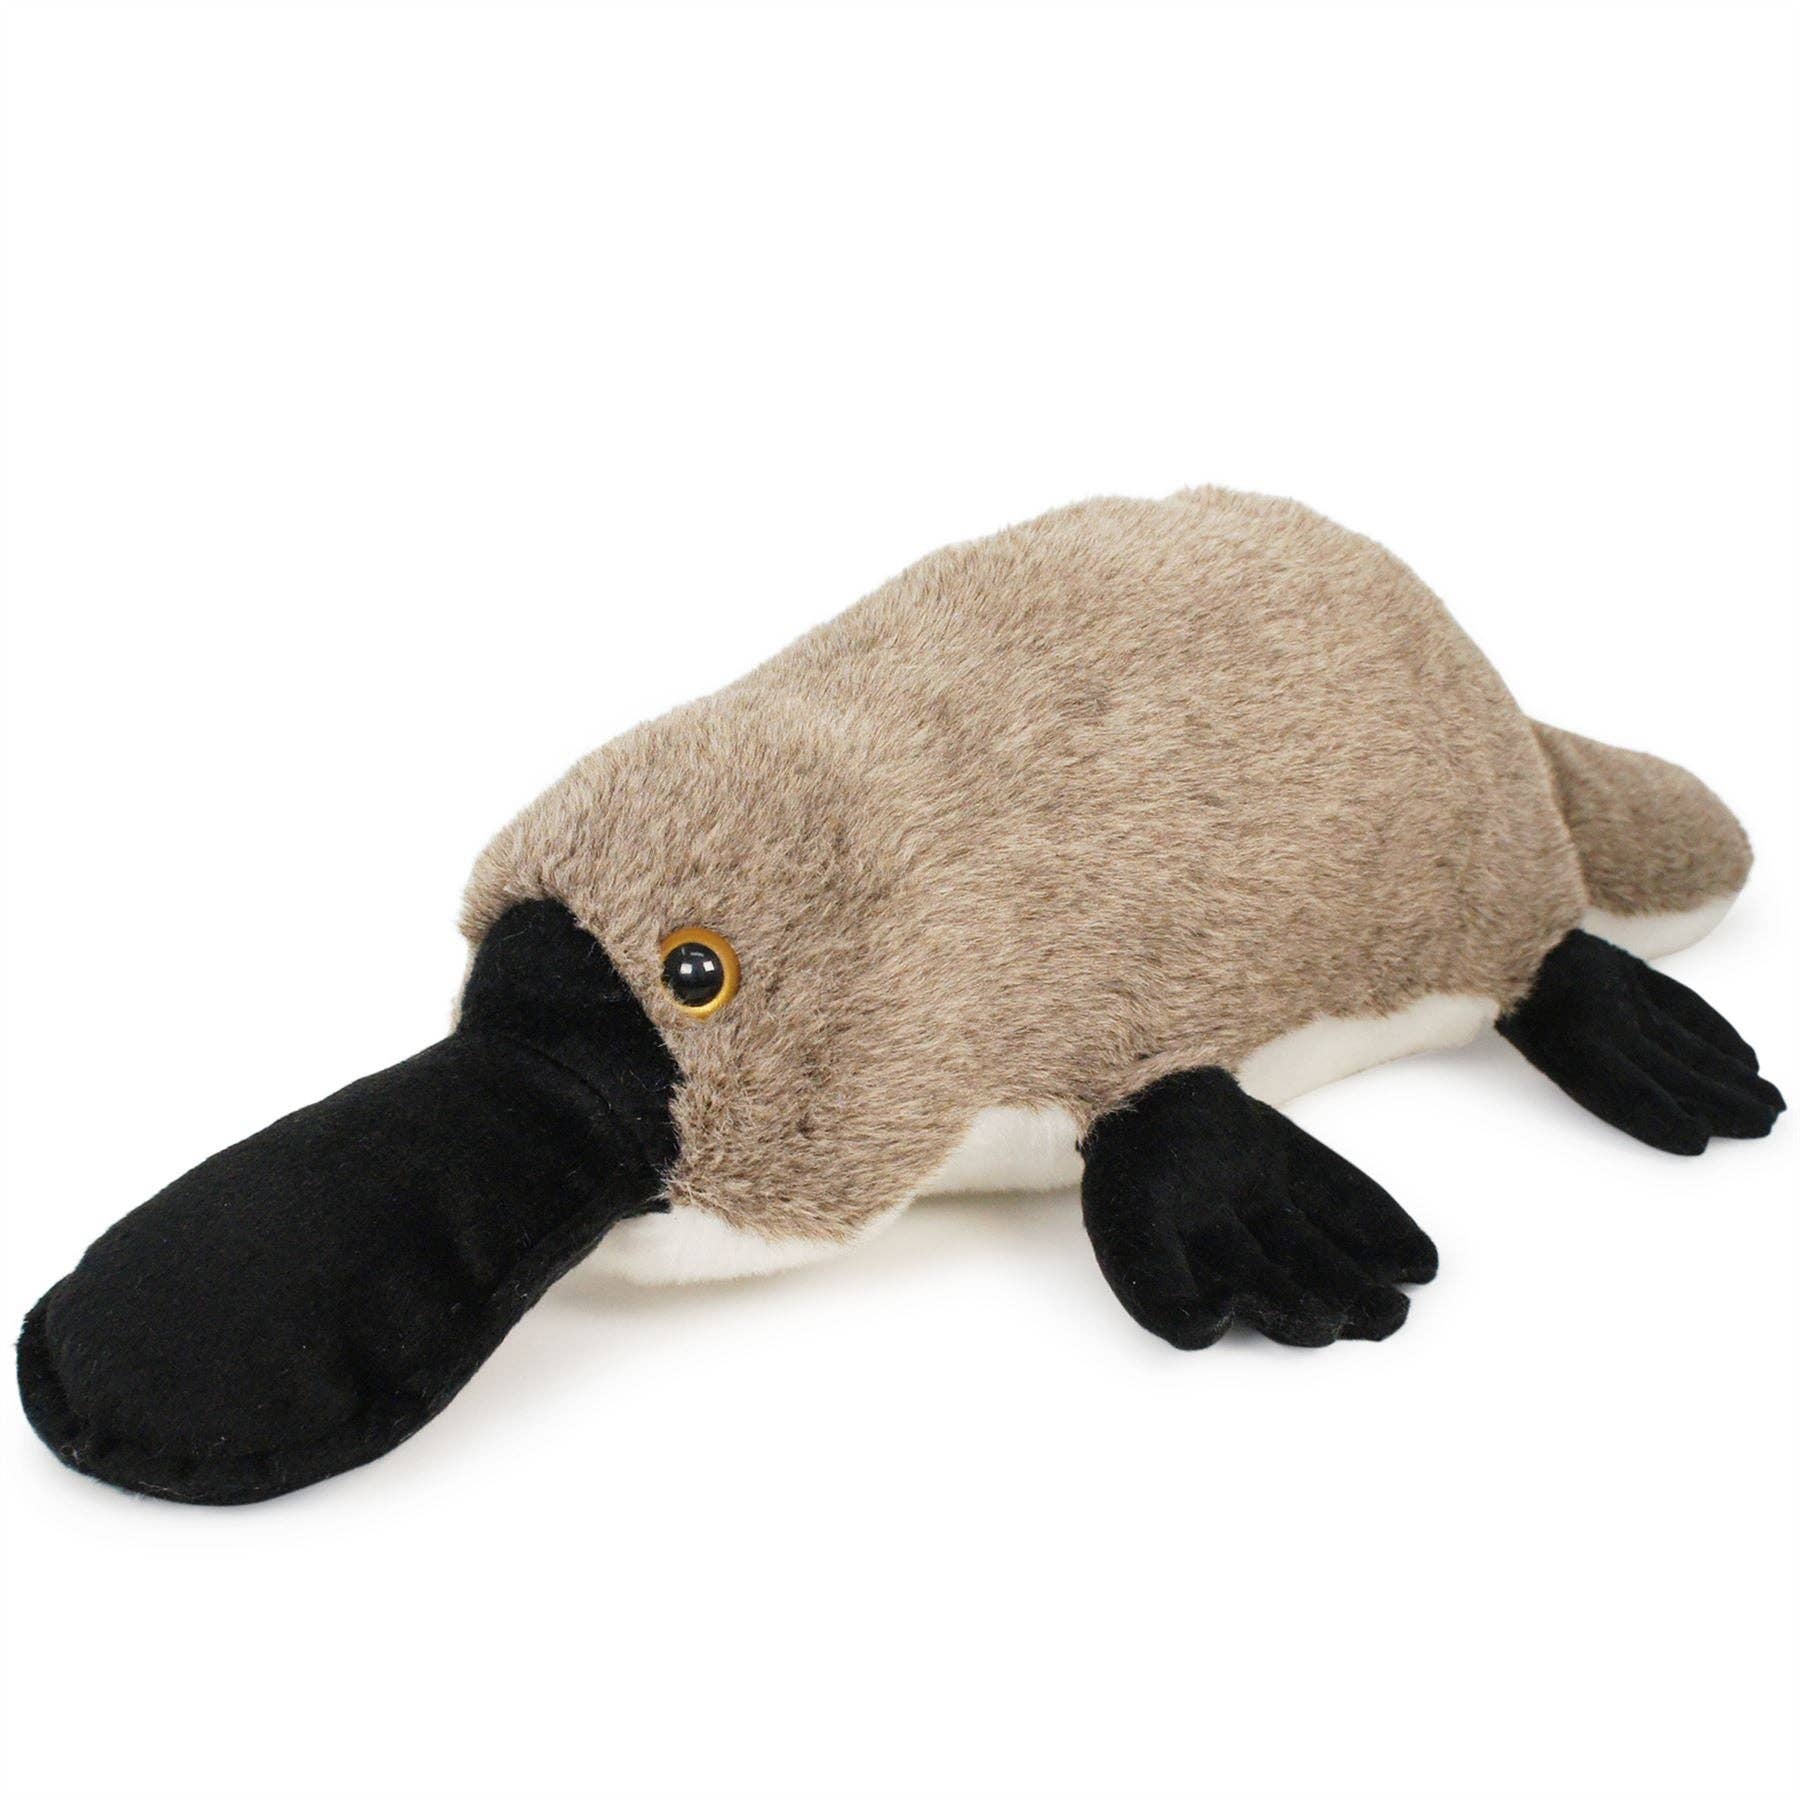 Prudence The Platypus, 21 Inch Stuffed Animal Plush